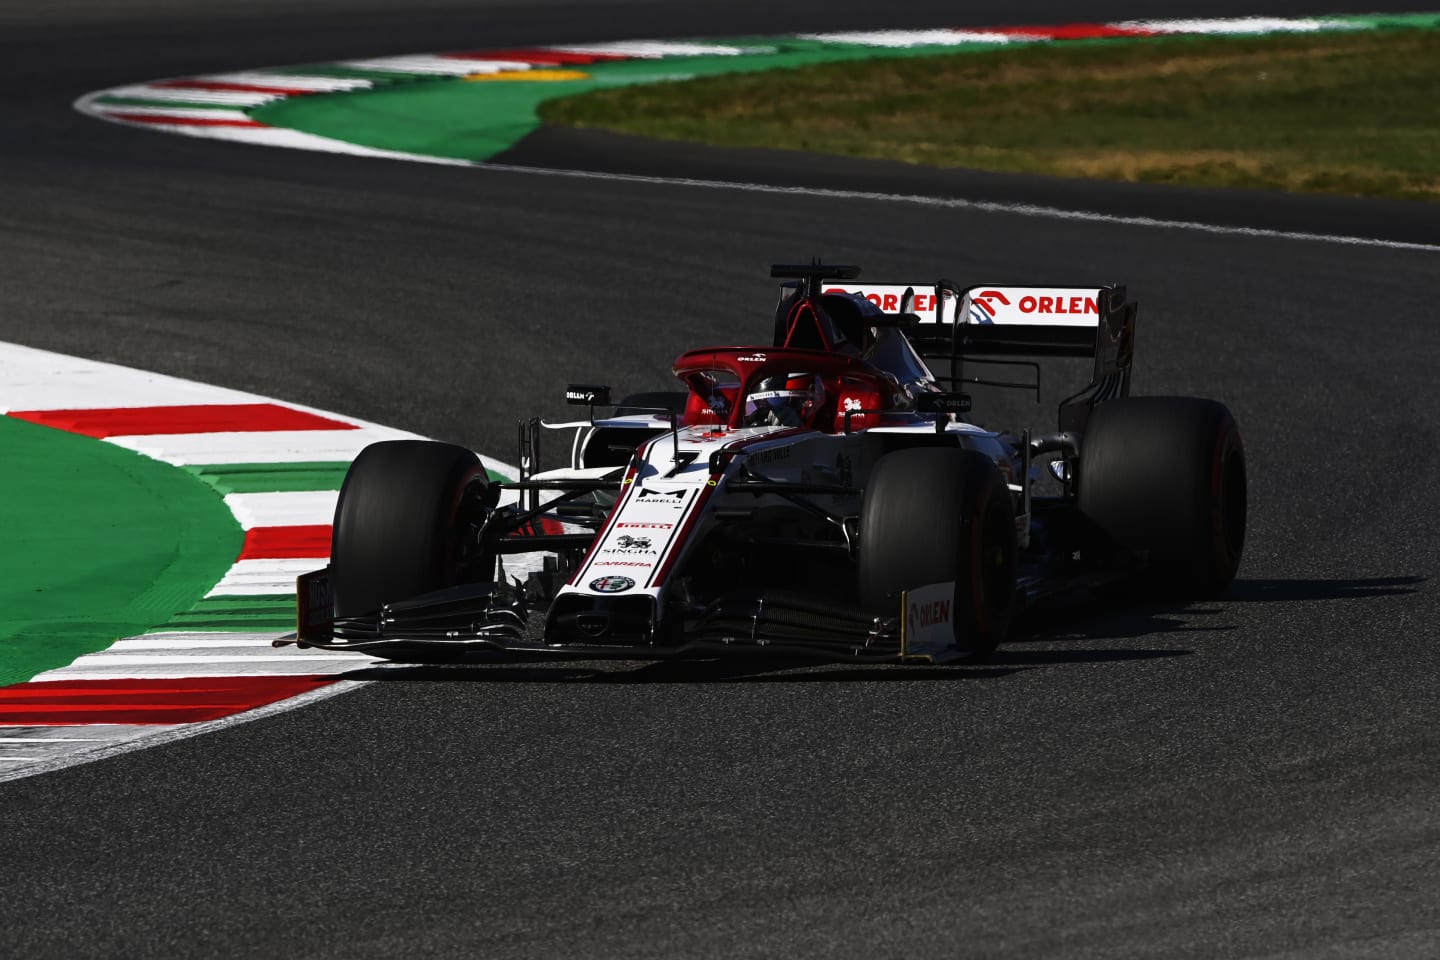 SCARPERIA, ITALY - SEPTEMBER 12: Kimi Raikkonen of Finland driving the (7) Alfa Romeo Racing C39